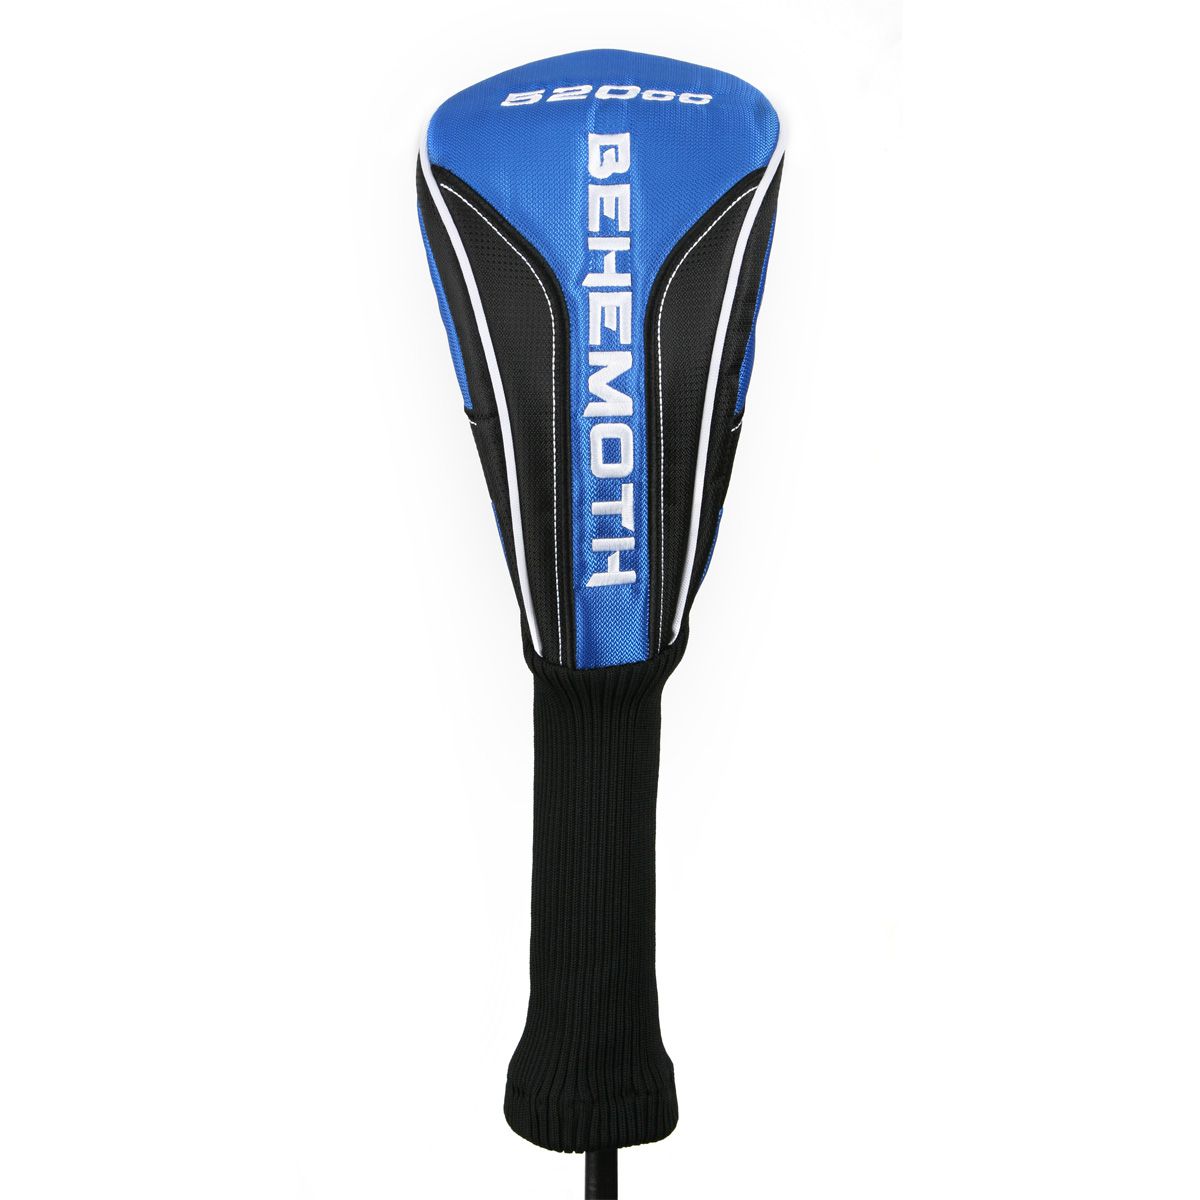 black/blue head cover for the Intech Behemoth Draw Golf Driver